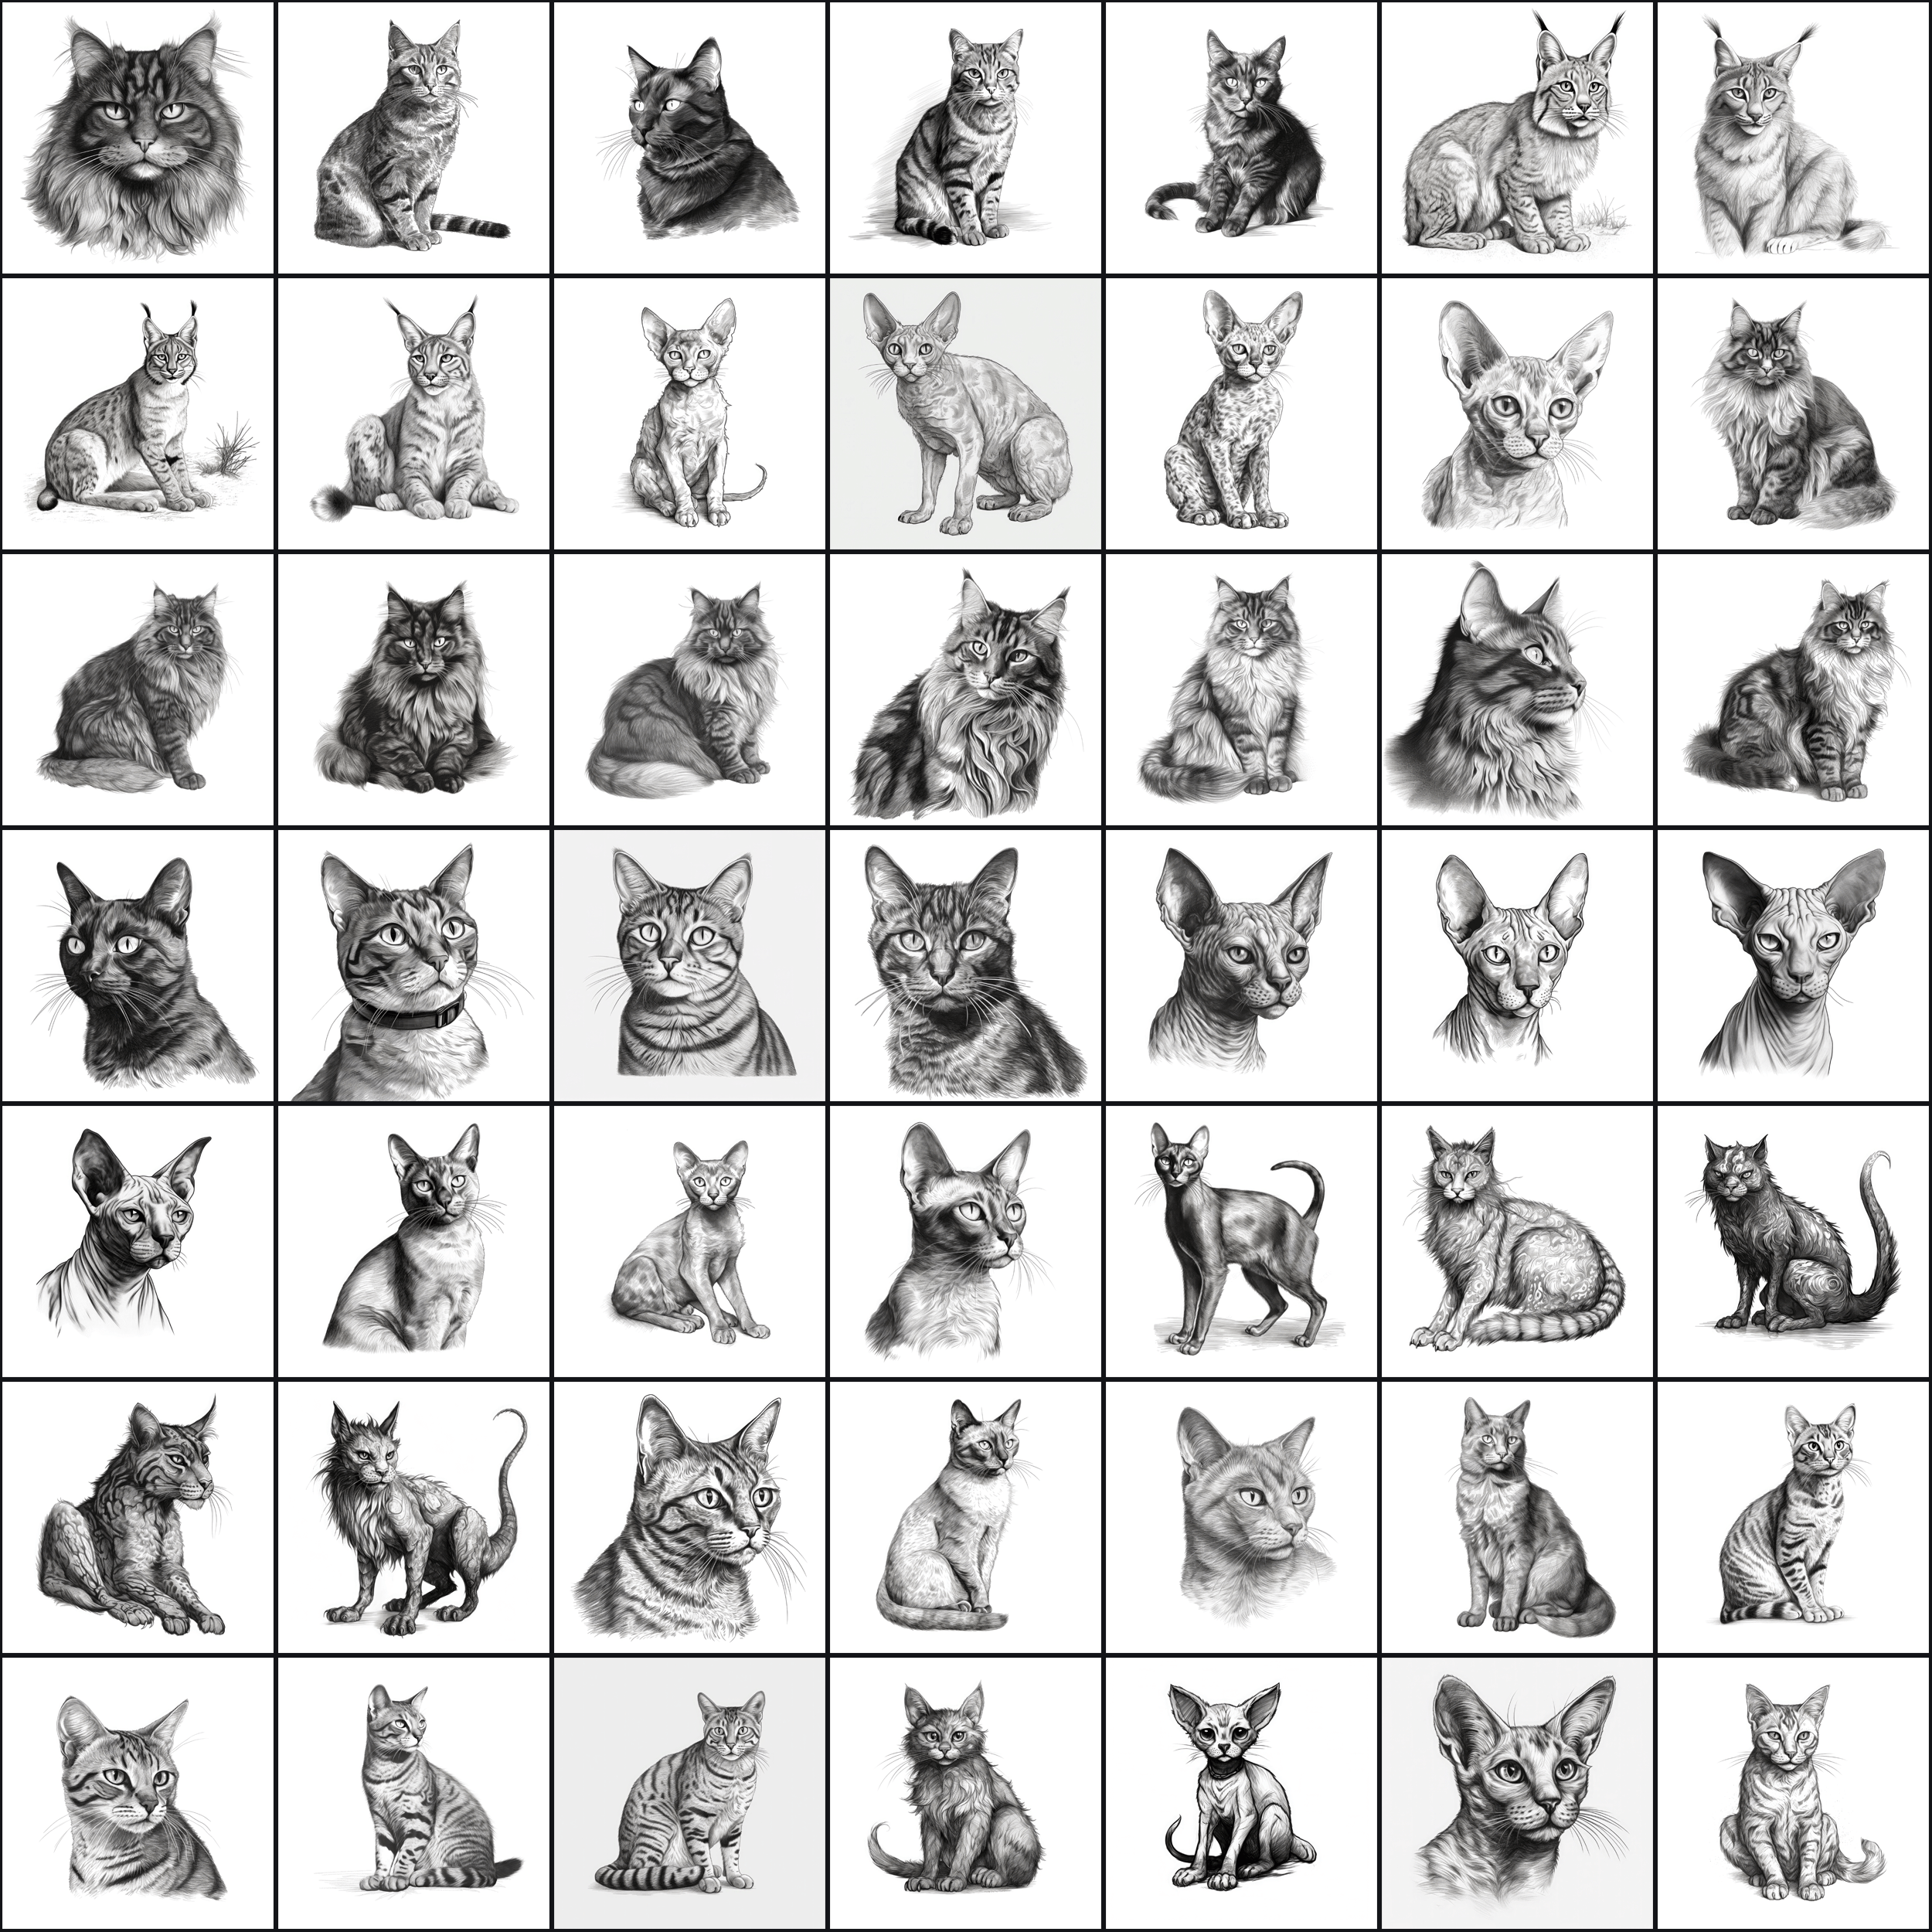 590 Sketch Cat Breed PNGs, Black & White Cat Images Digital Download Sumobundle